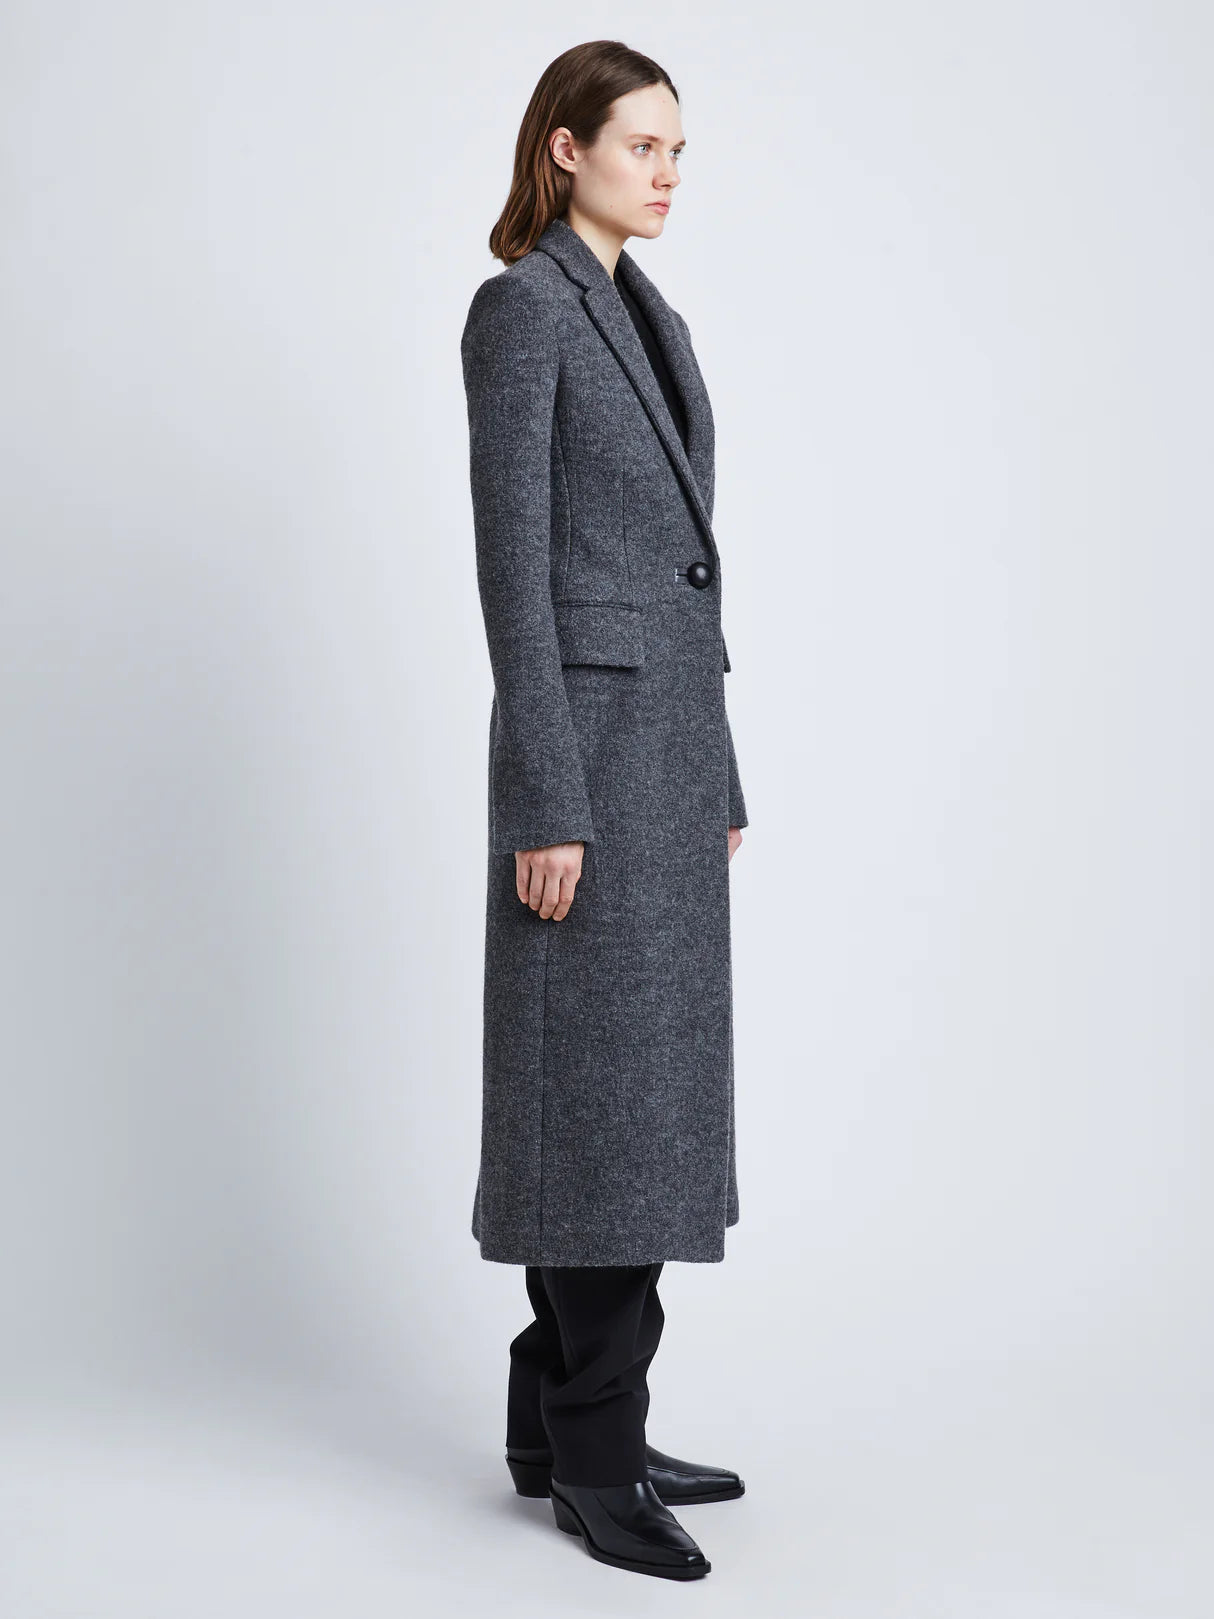 Wool Jersey Coat - Grey Melange